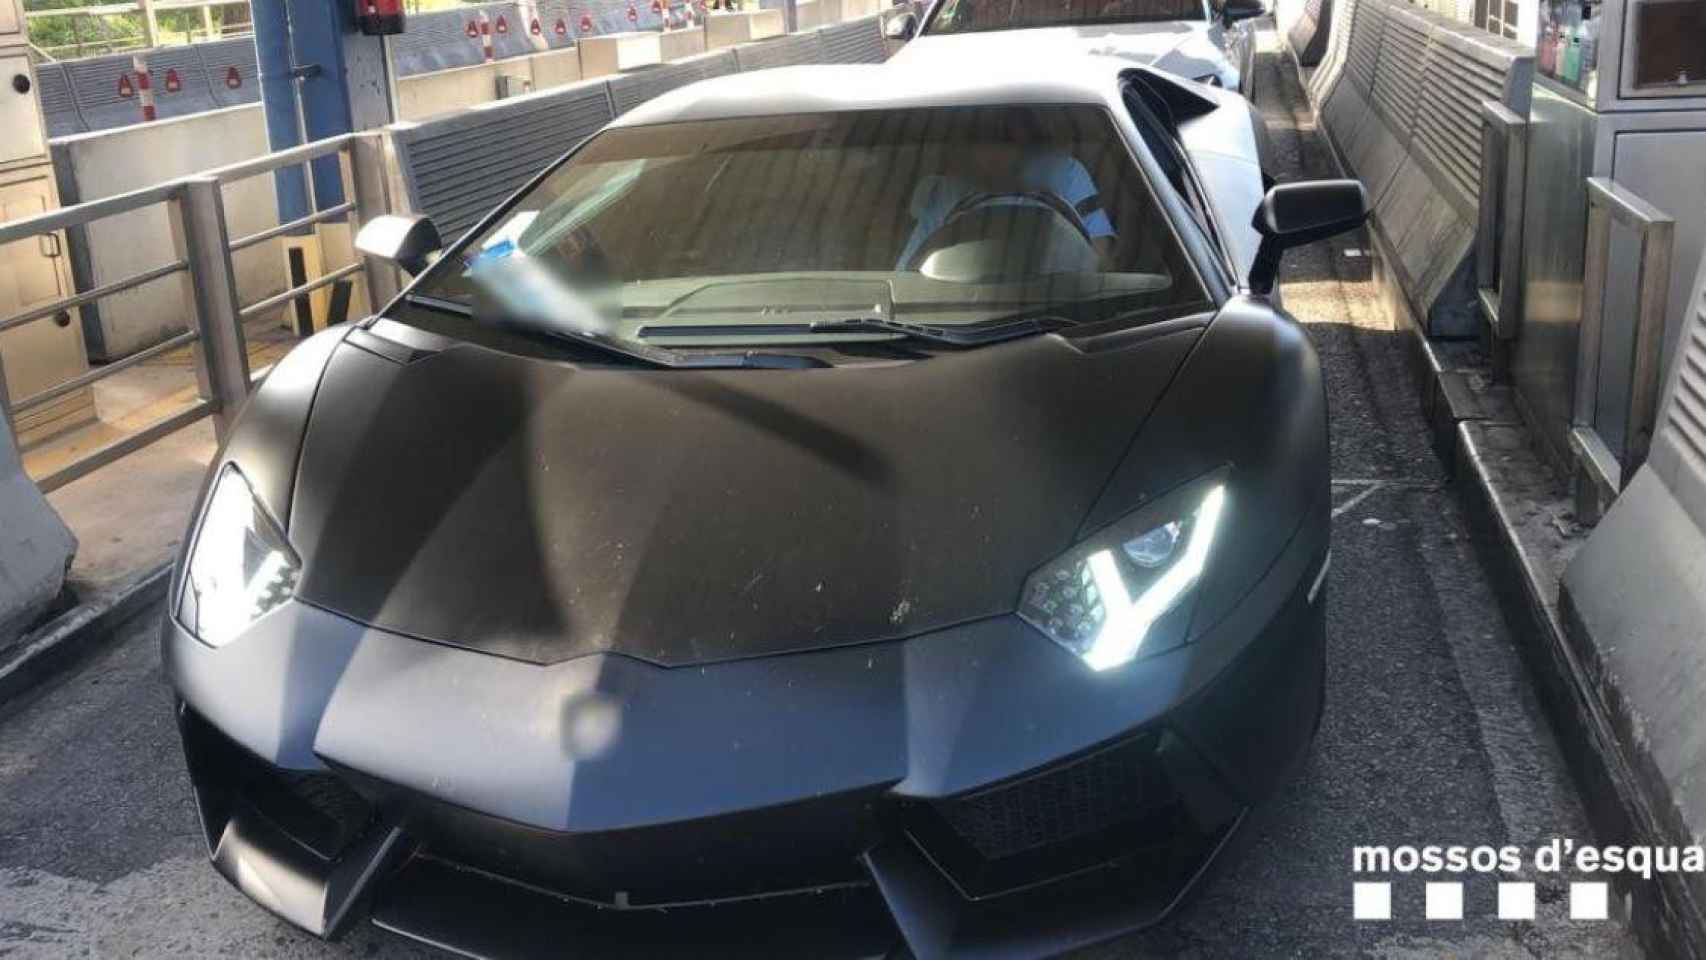 El Lamborghini que conducía a alta velocidad el joven detenido con carnet falsificado / MOSSOS D'ESQUADRA